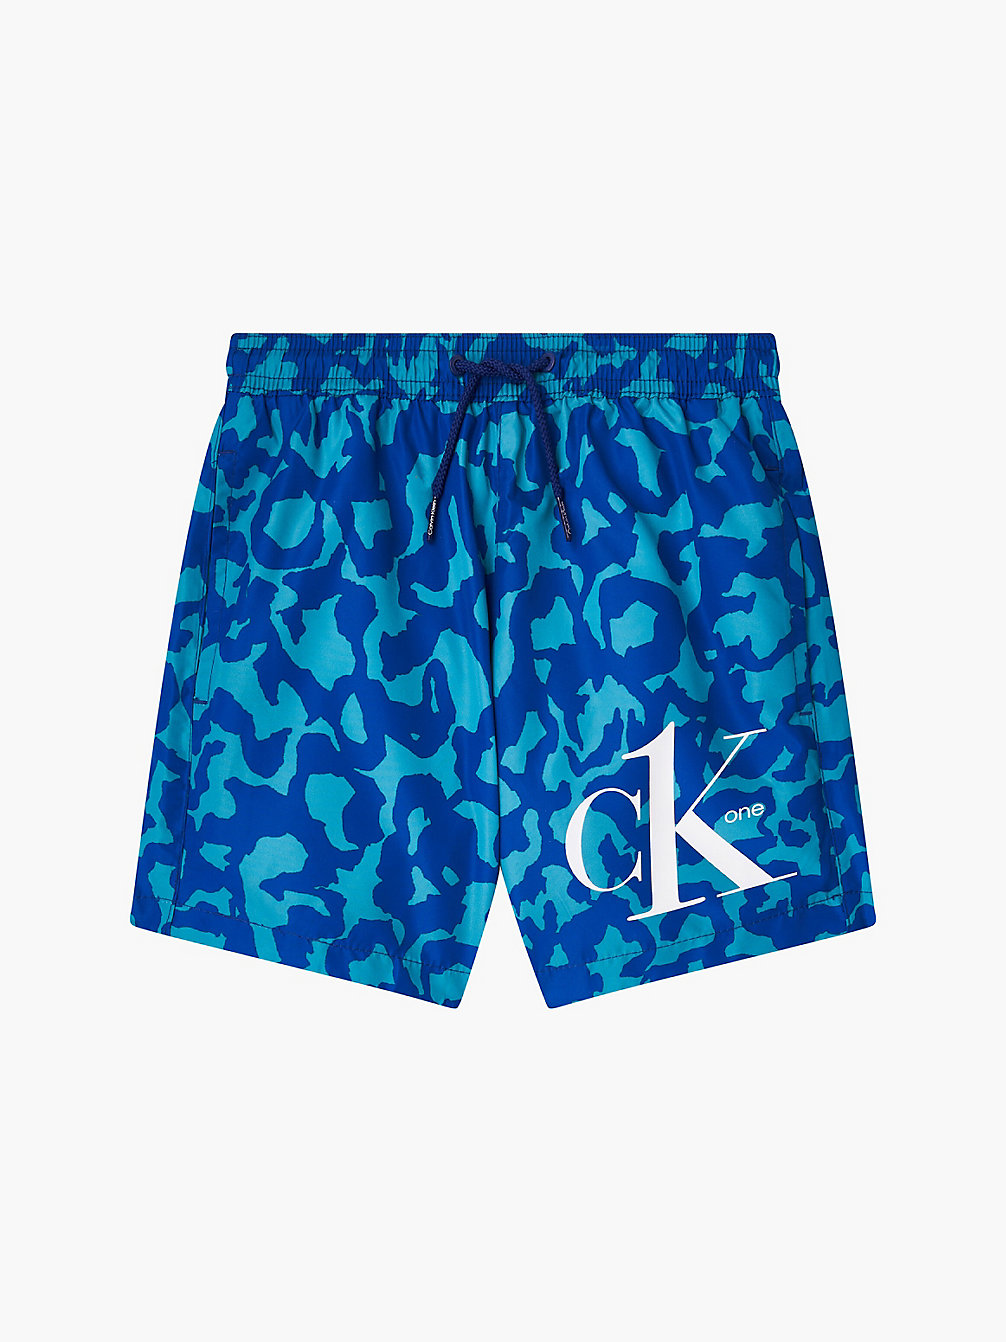 POISON FROG BLUE AOP > Jongenszwemshorts - CK One > undefined jongens - Calvin Klein